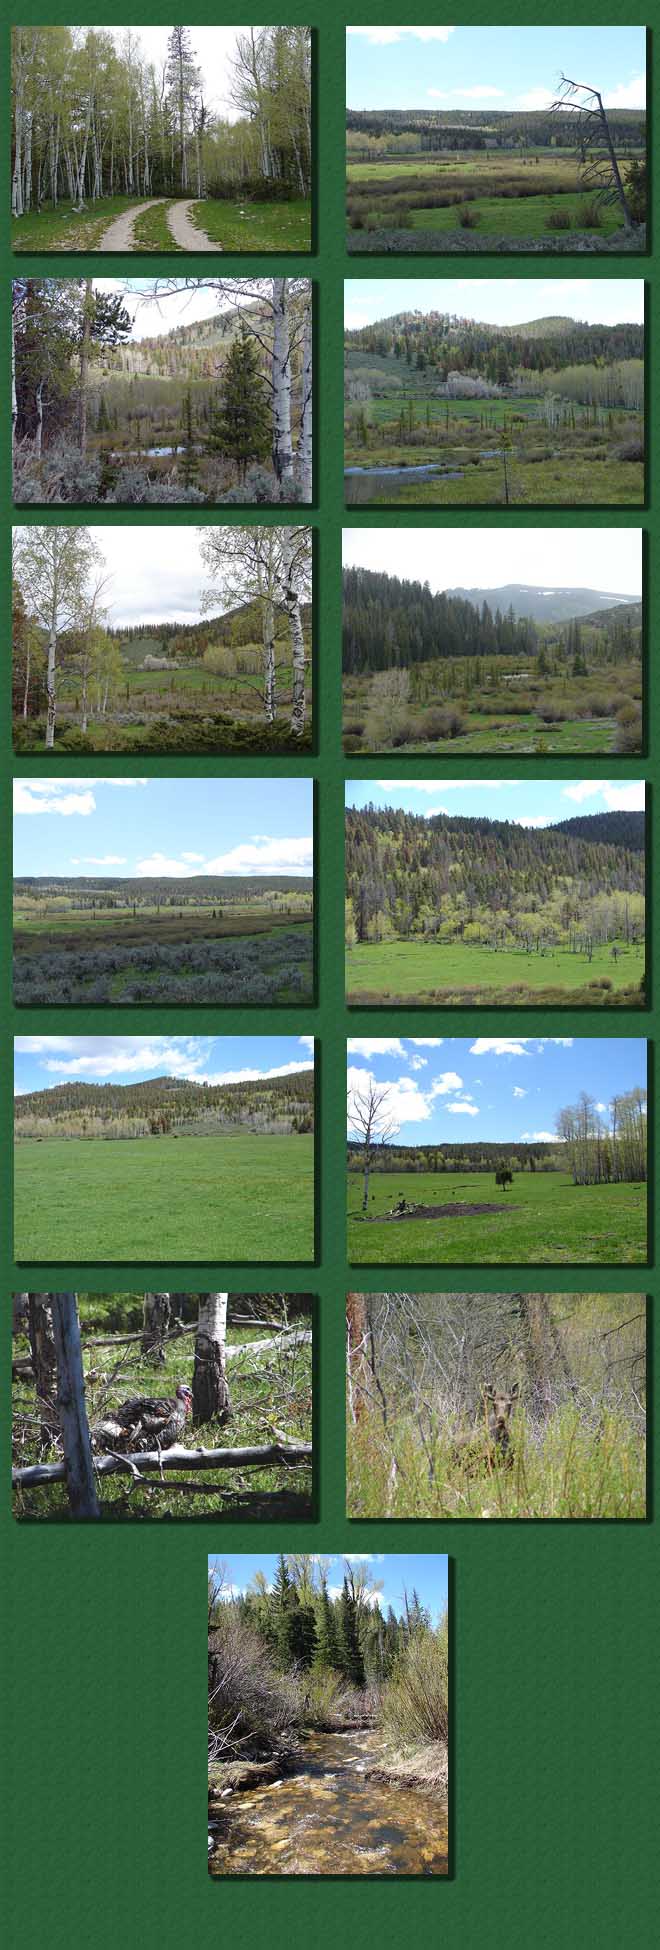 Stewart Ranch - Saratoga Wyoming